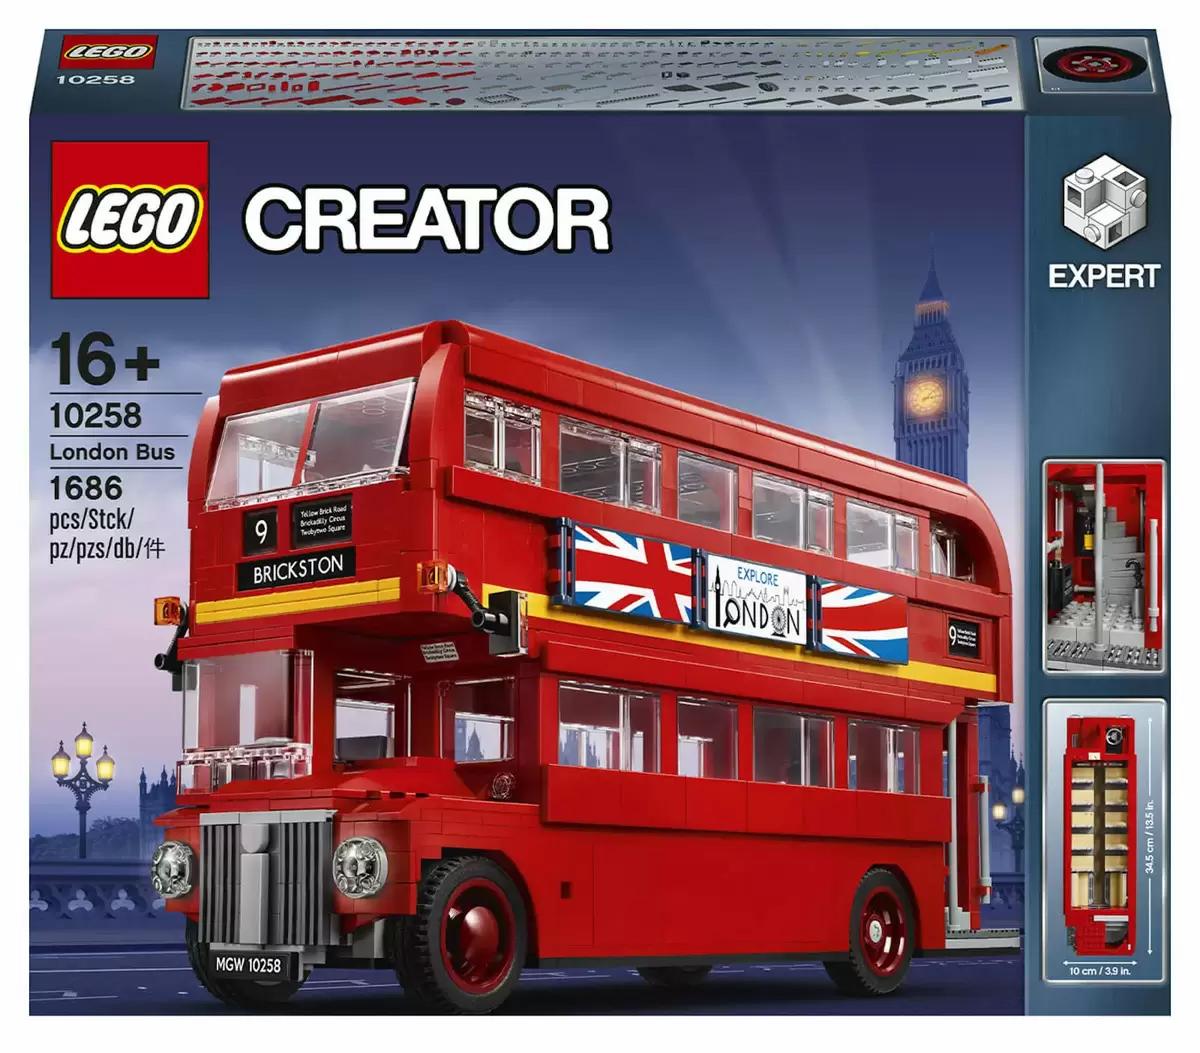 LEGO Creator Expert London Bus Building Kit for $99.95 Shipped